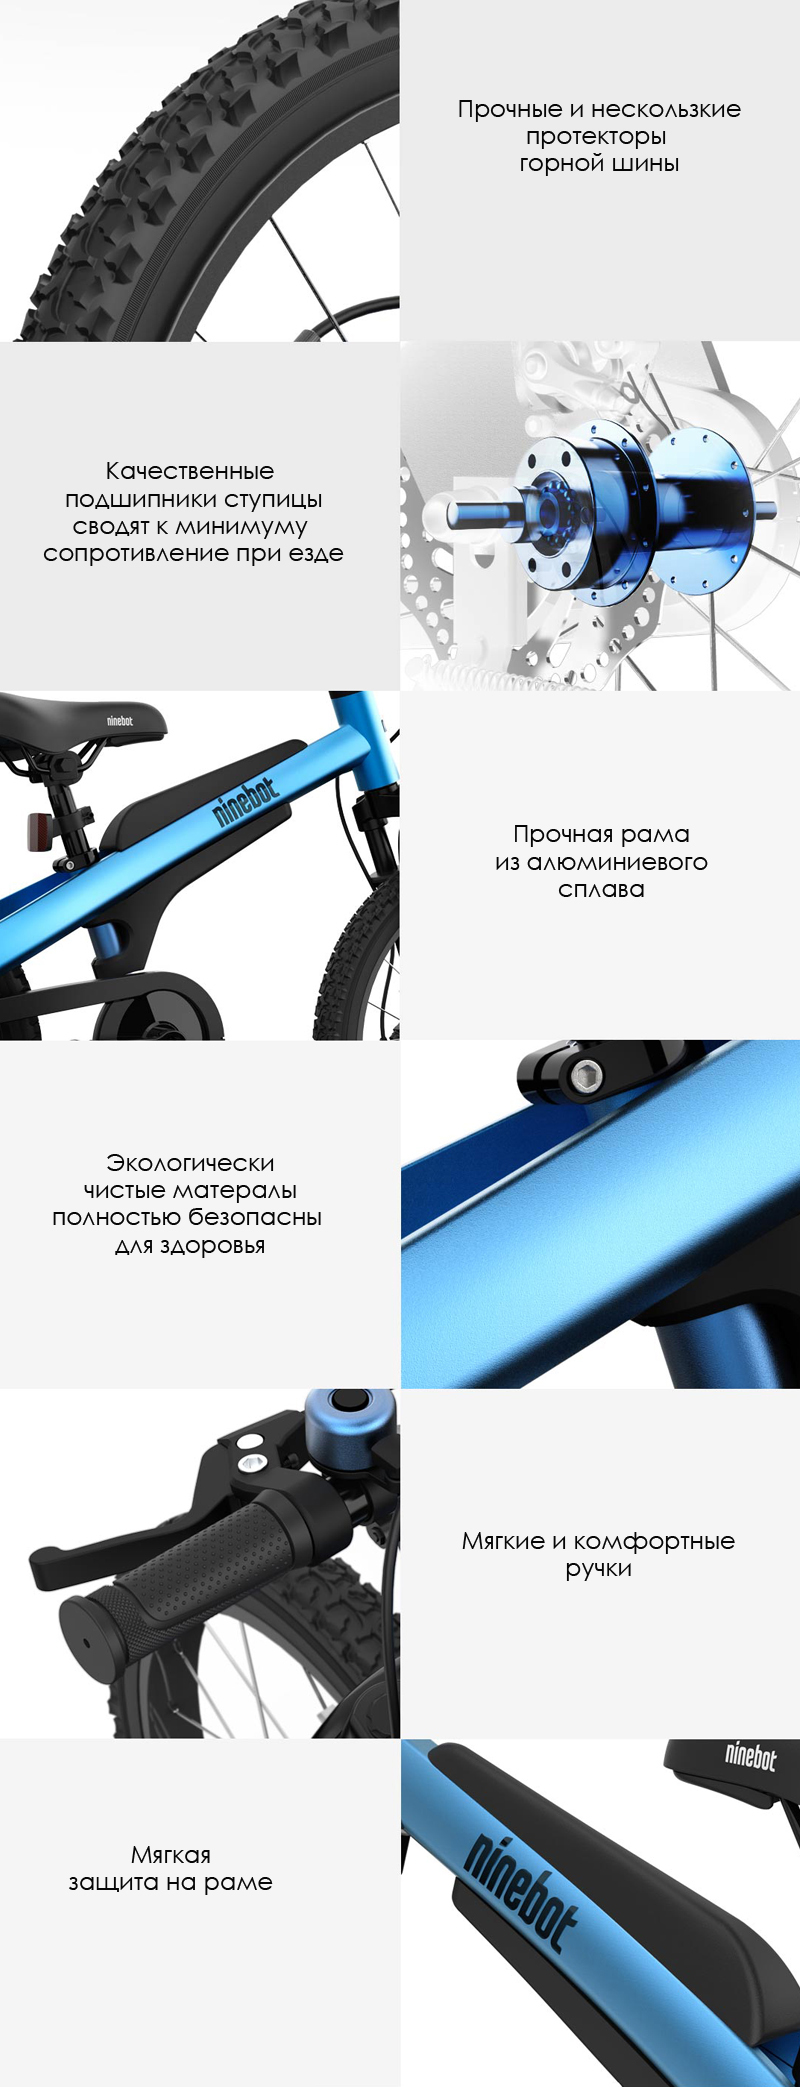 Велосипед Xiaomi Ninebot Kids Bike 18 (N1KB18)